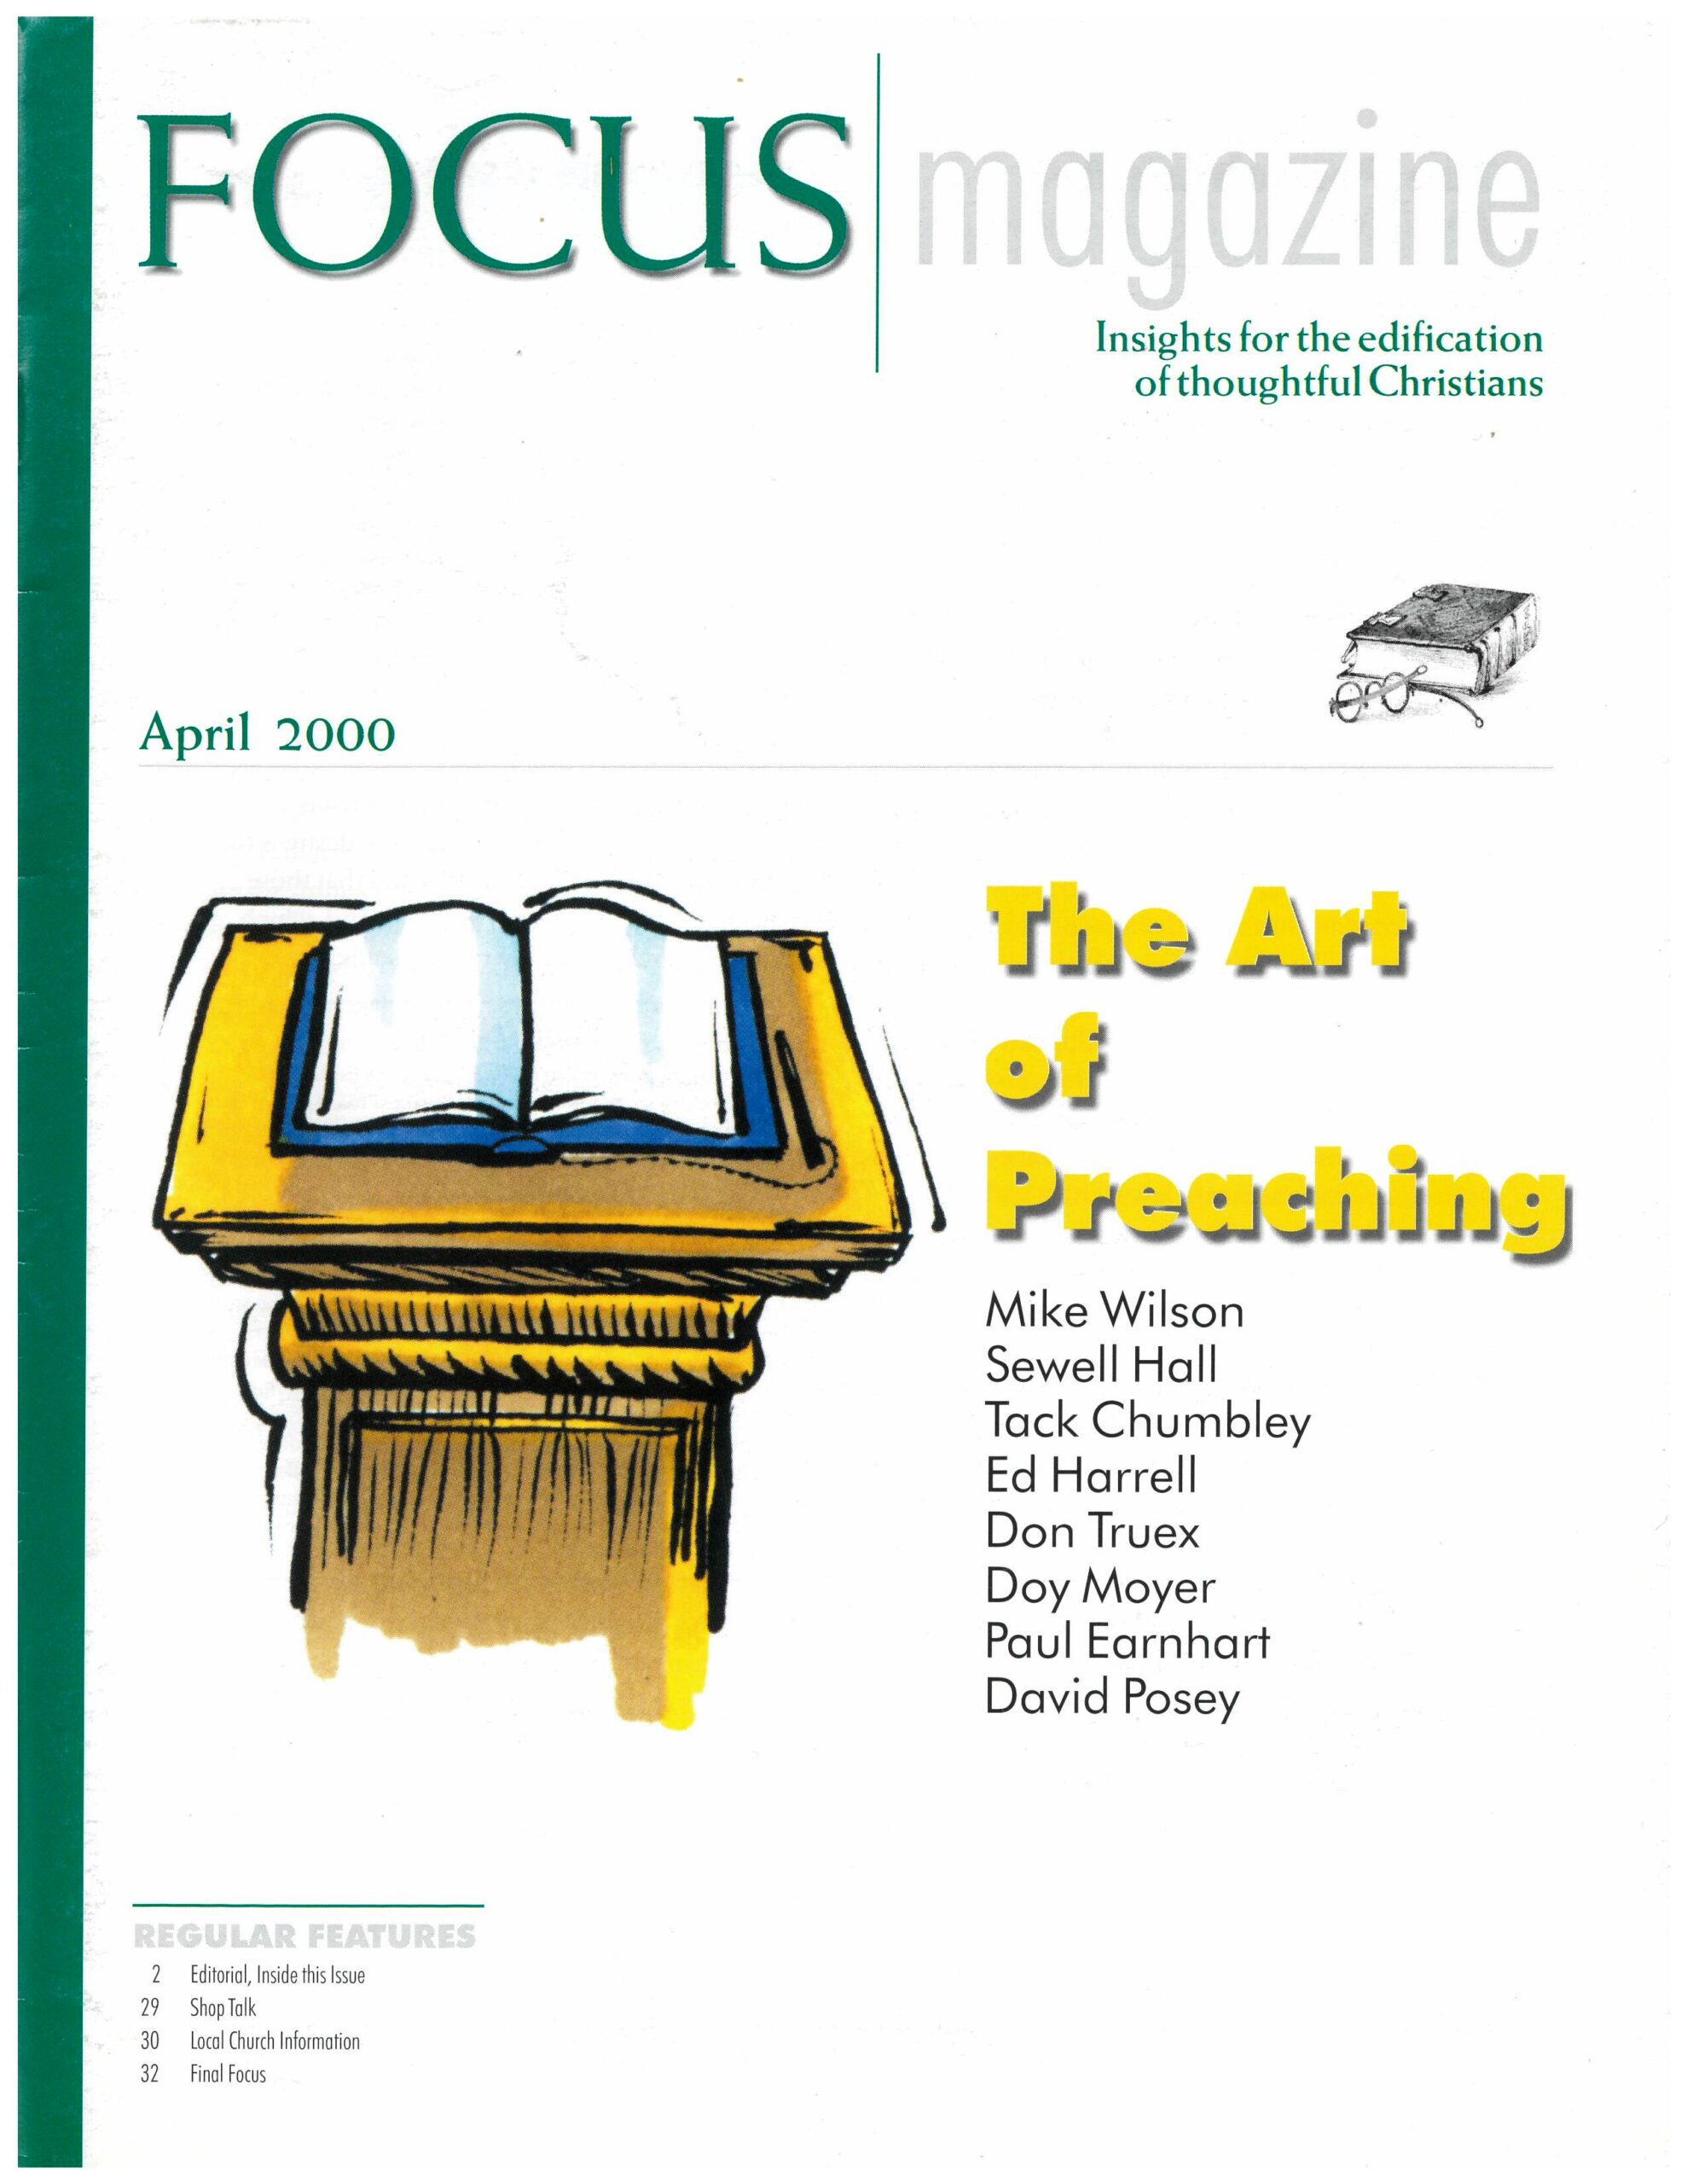 Focus Magazine, April 2000, front cover